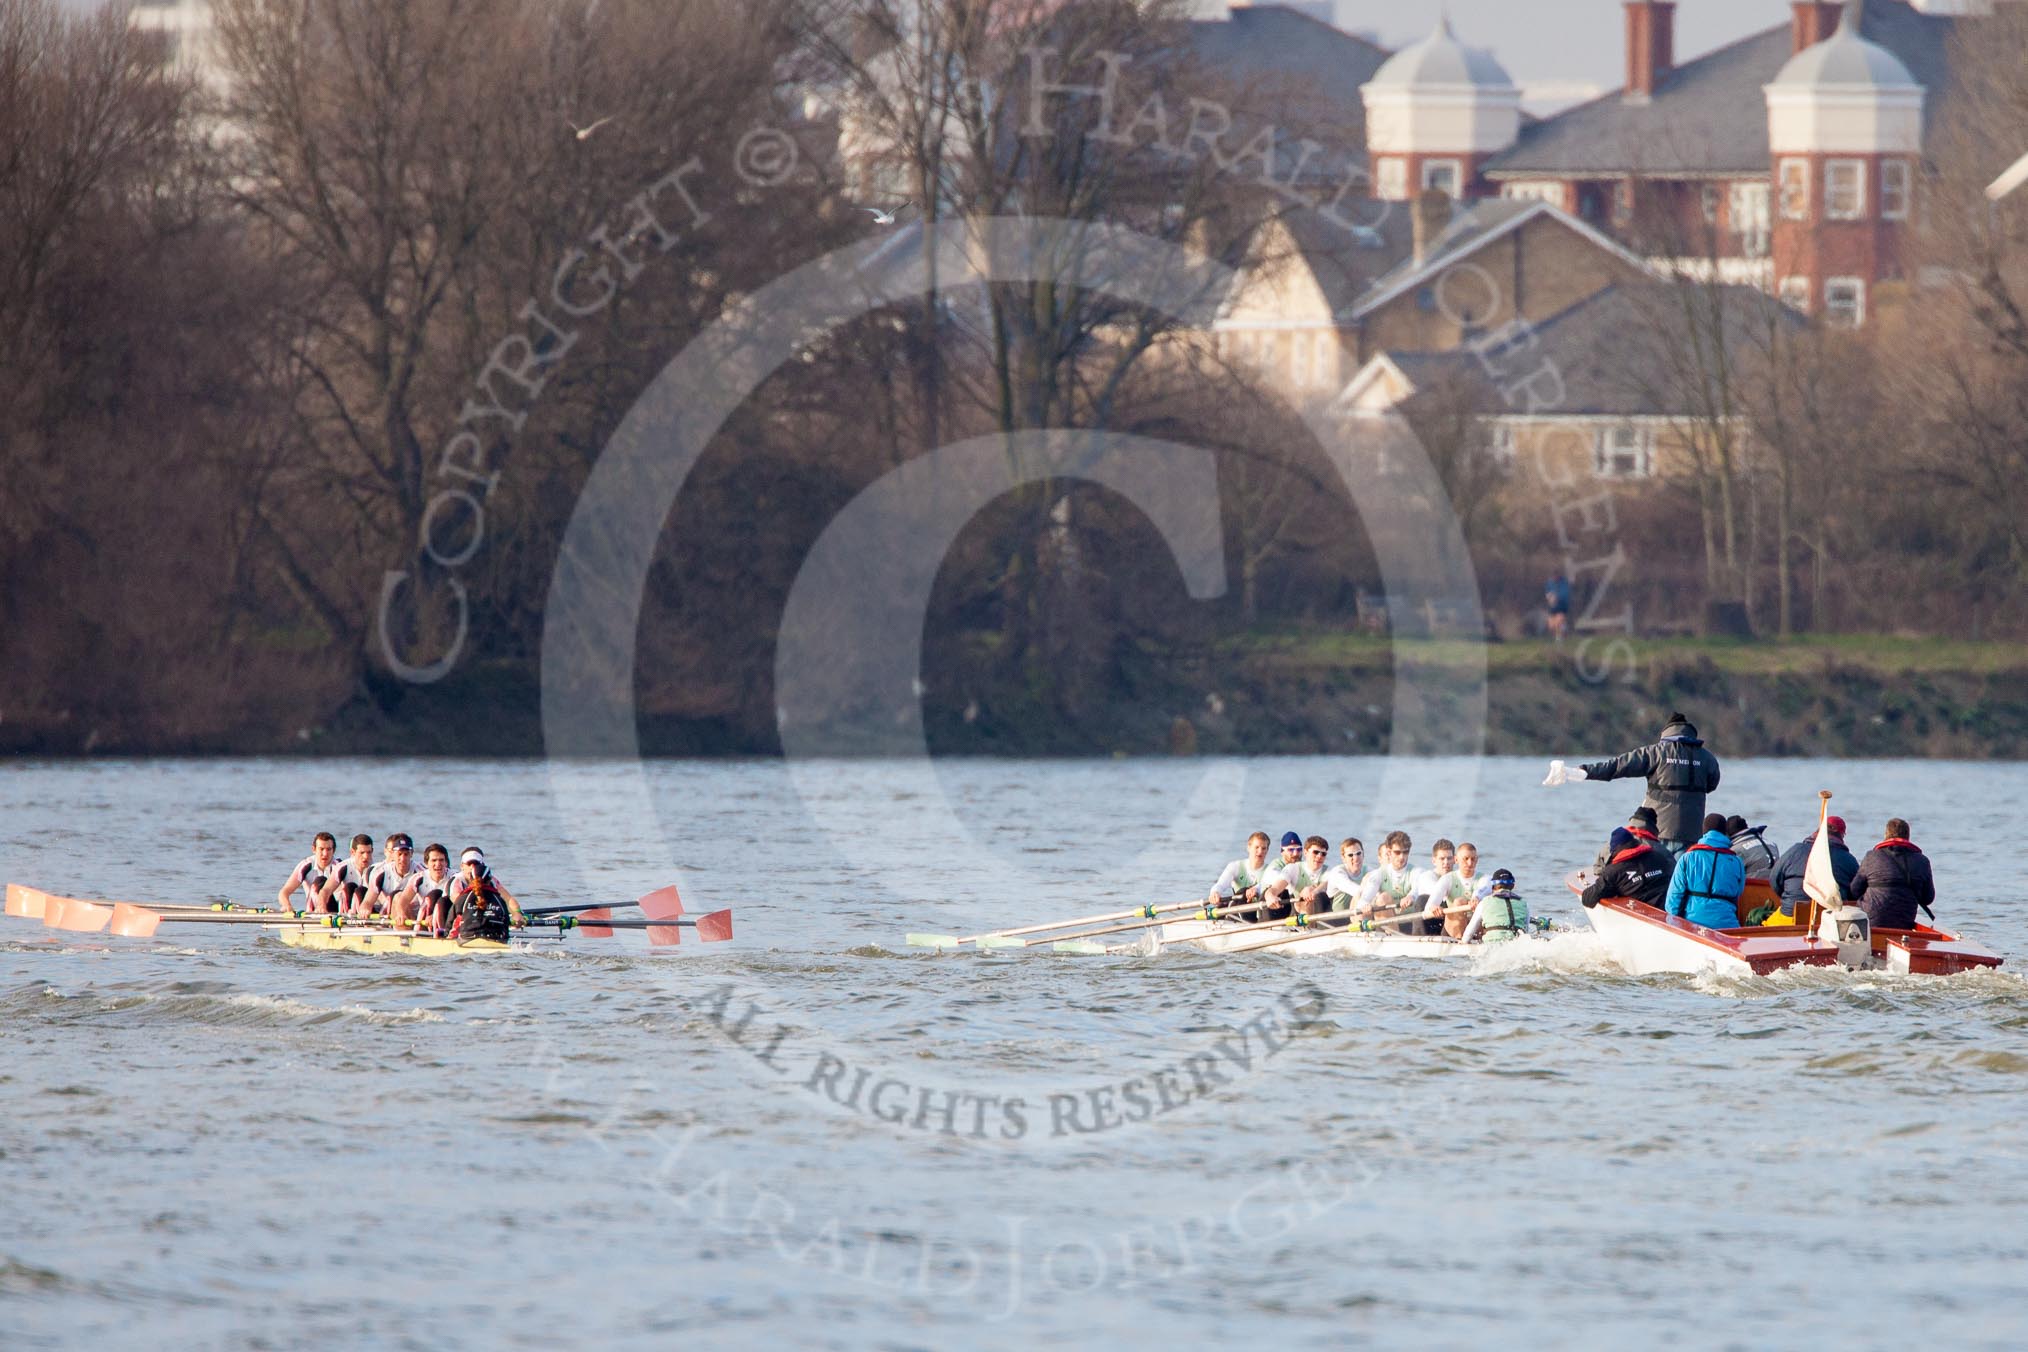 The Boat Race season 2013 - fixture CUBC vs Leander.
River Thames Tideway between Putney Bridge and Mortlake,
London SW15,

United Kingdom,
on 02 March 2013 at 15:59, image #152